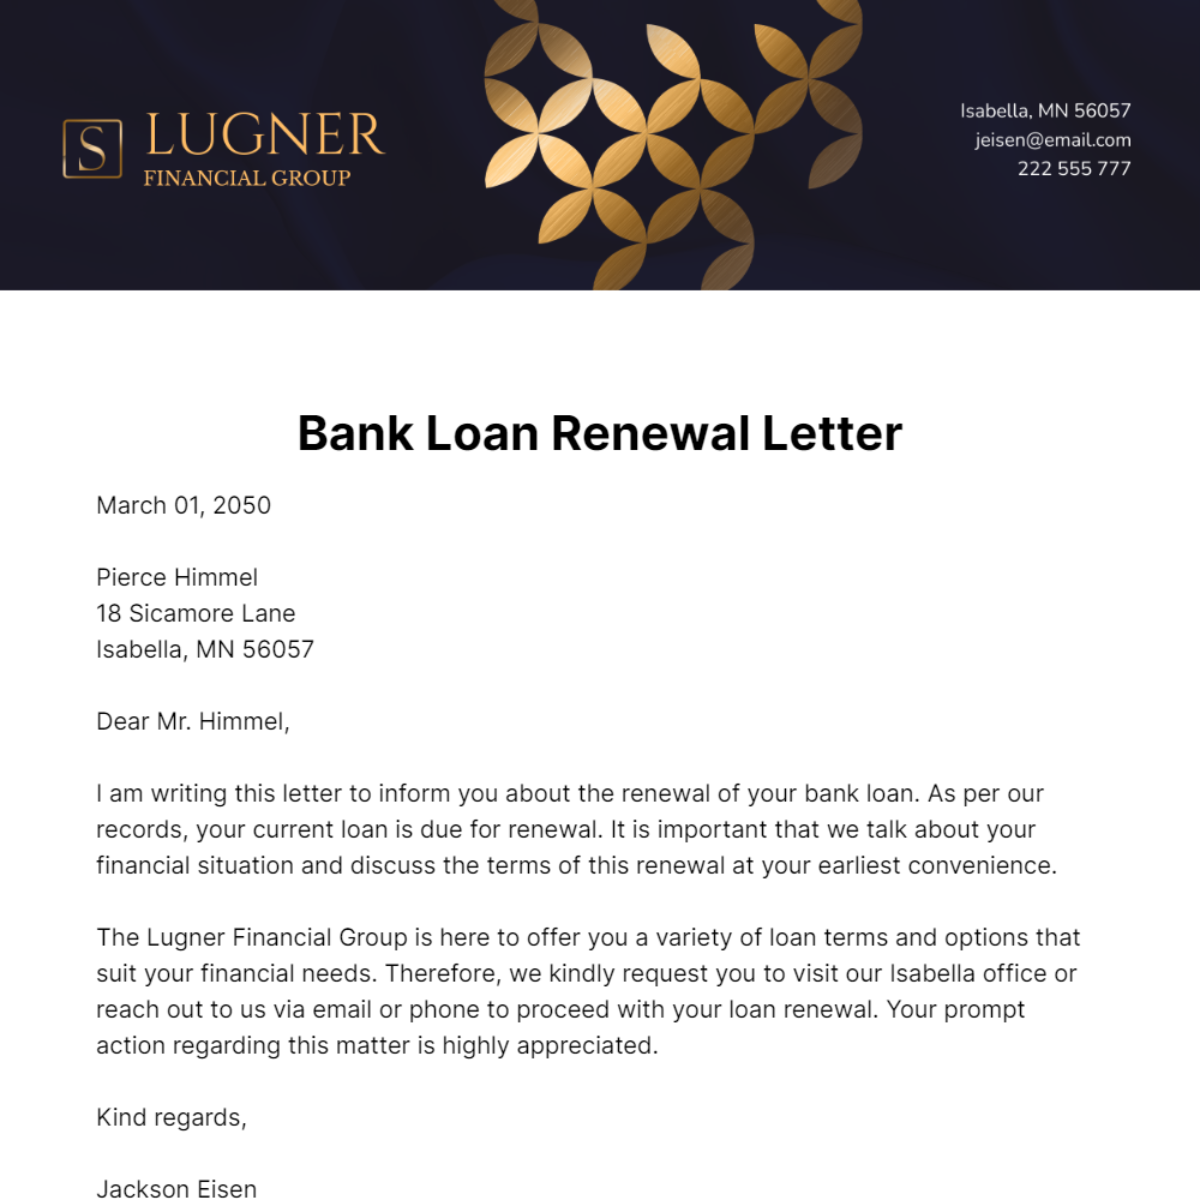 Bank Loan Renewal Letter   Template